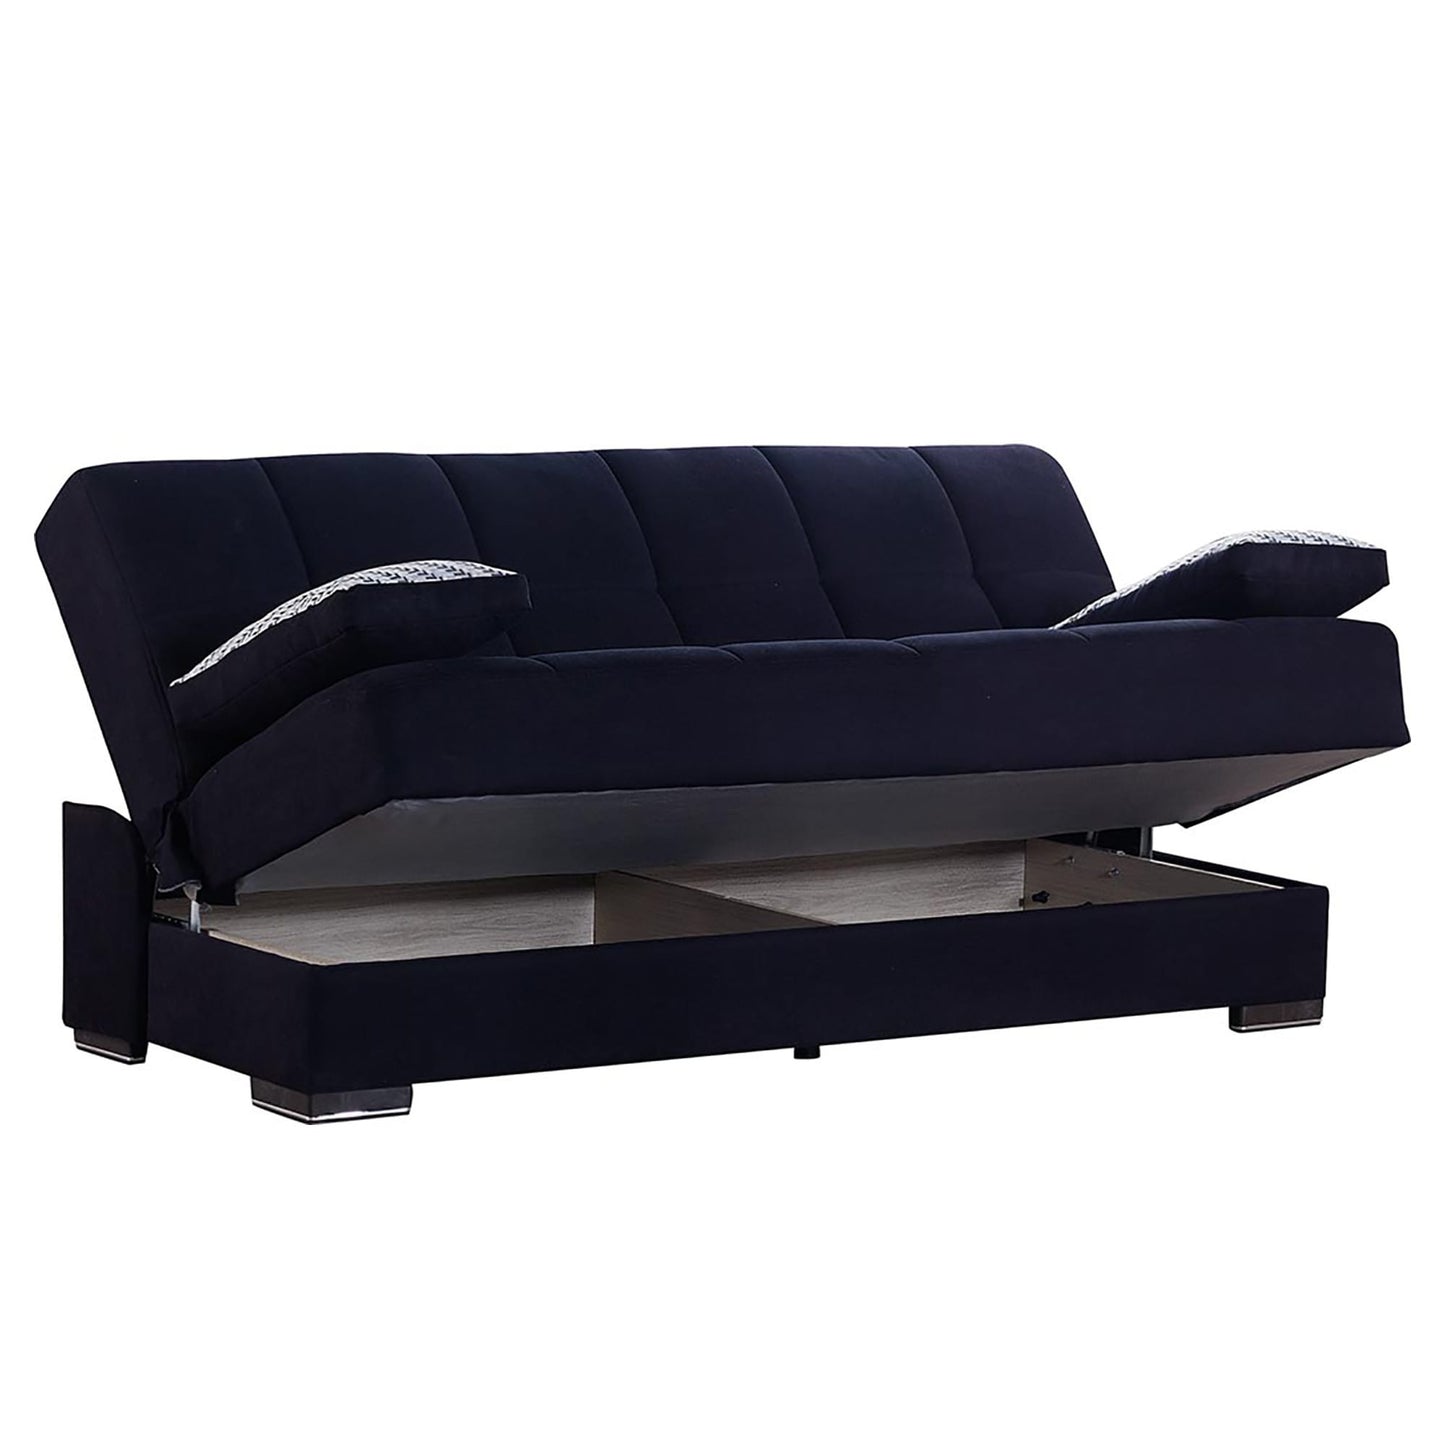 Soho Convertible Sofa Bed in Black Fabric